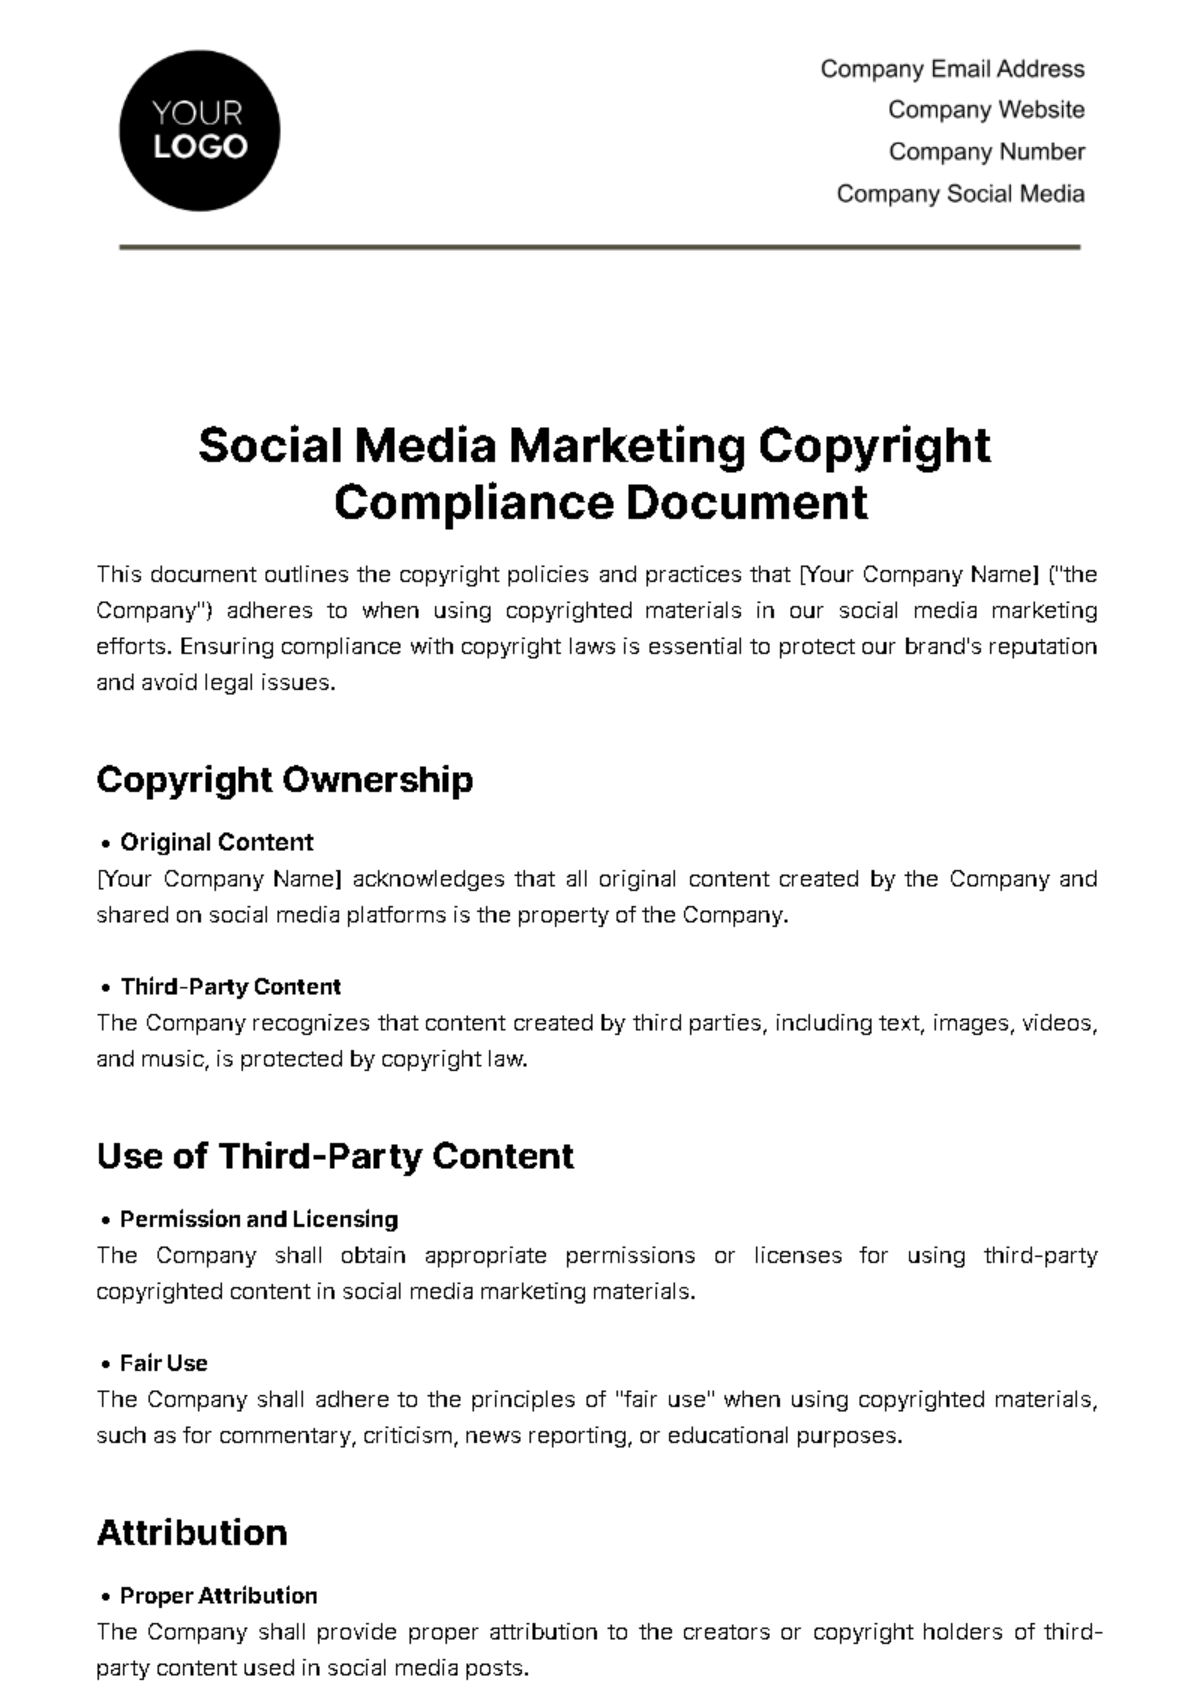 Social Media Marketing Copyright Compliance Document Template